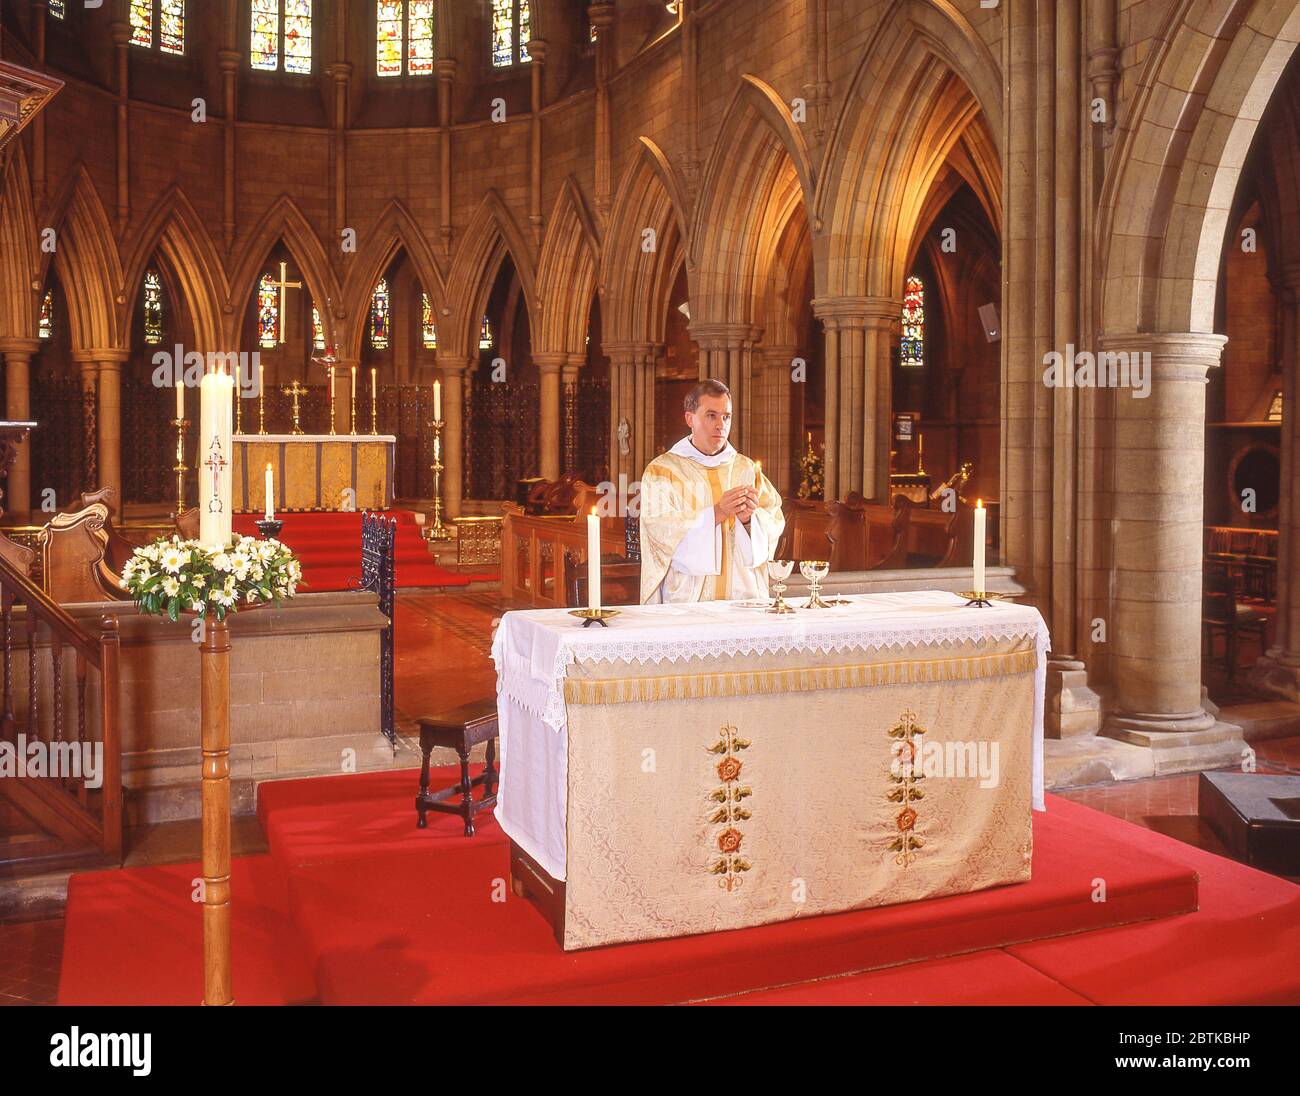 Vicar at church altar, Surrey, England, United Kingdom Stock Photo